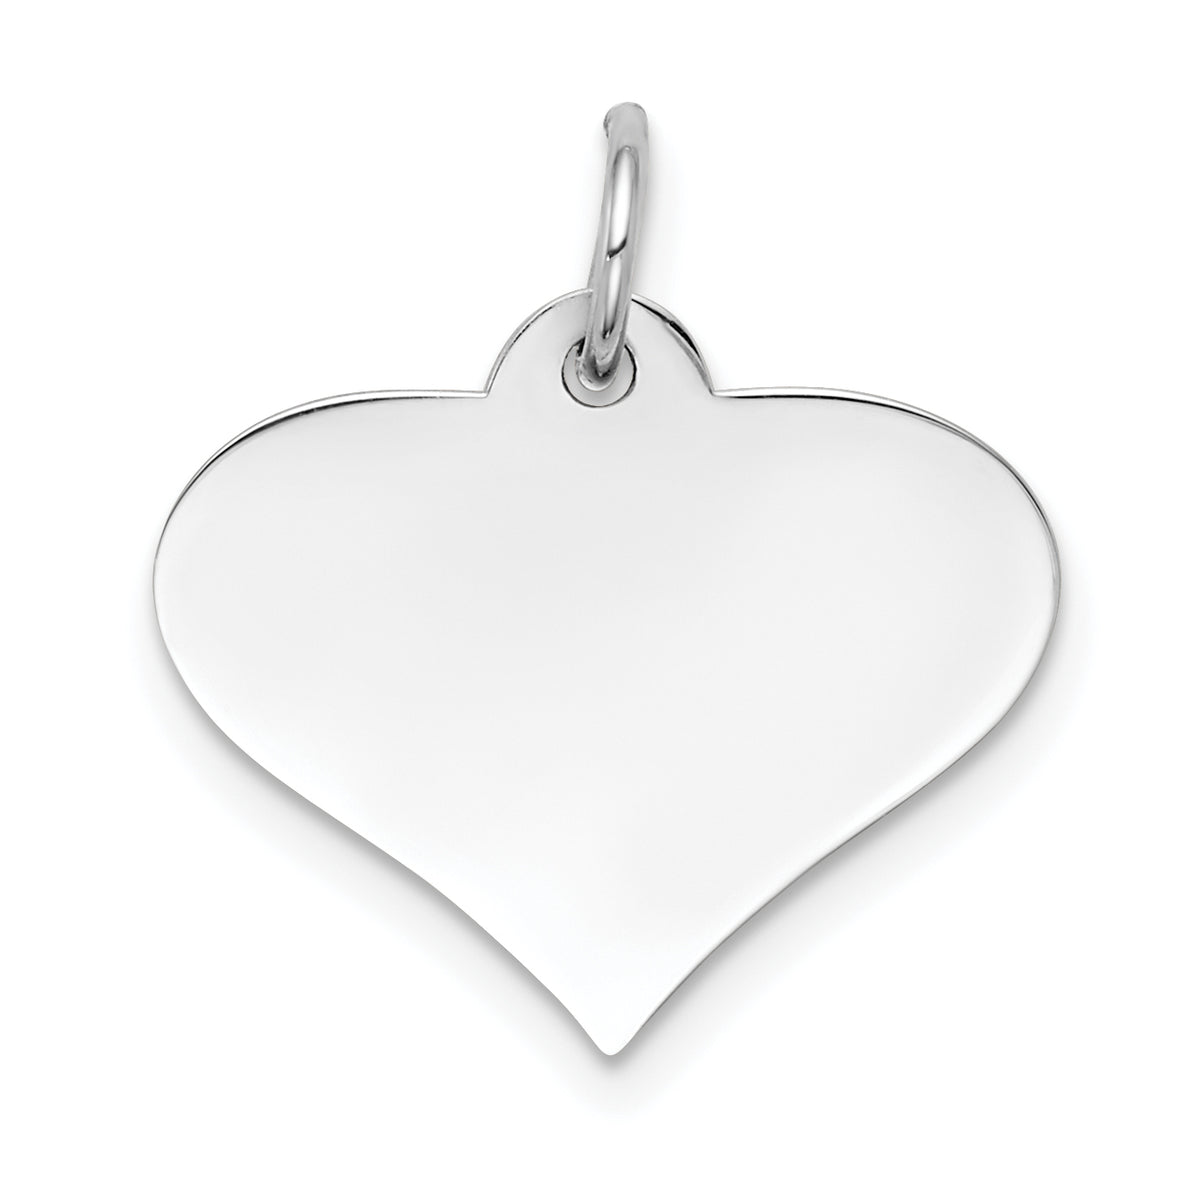 14K White Gold Plain .018 Gauge Engraveable Heart Disc Charm